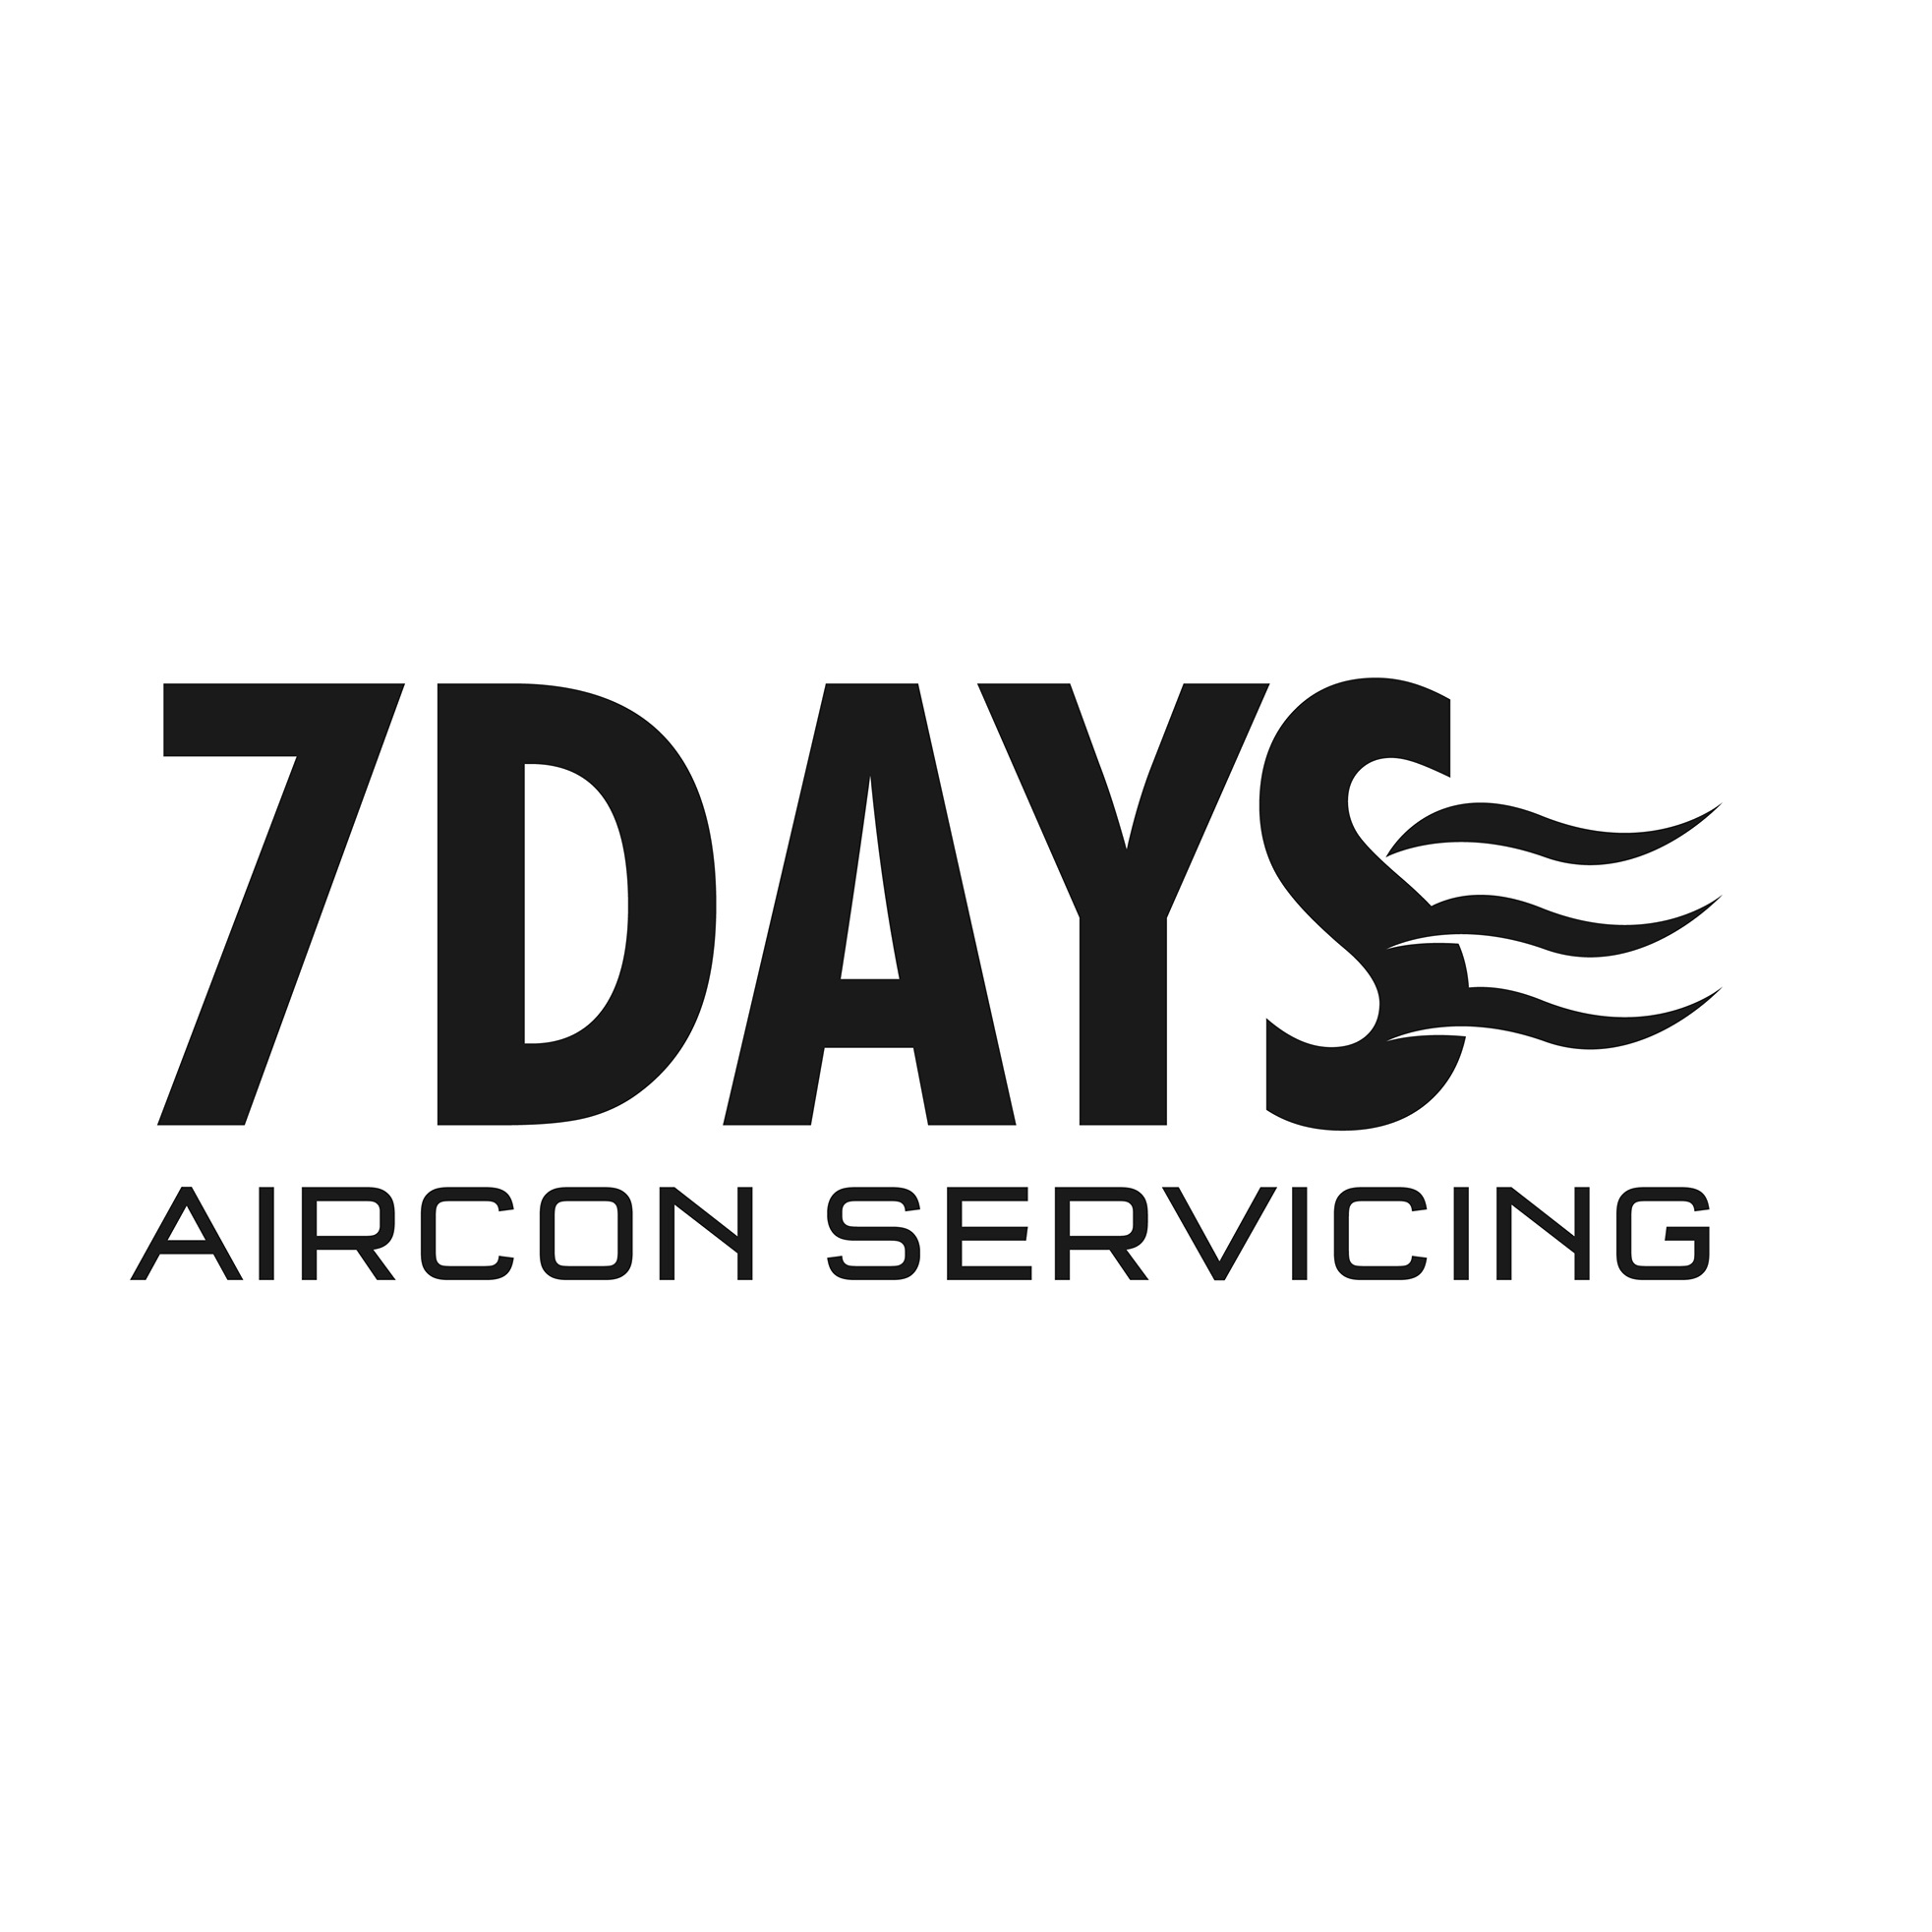 7Days Aircon Servicing Singapore Pte Ltd